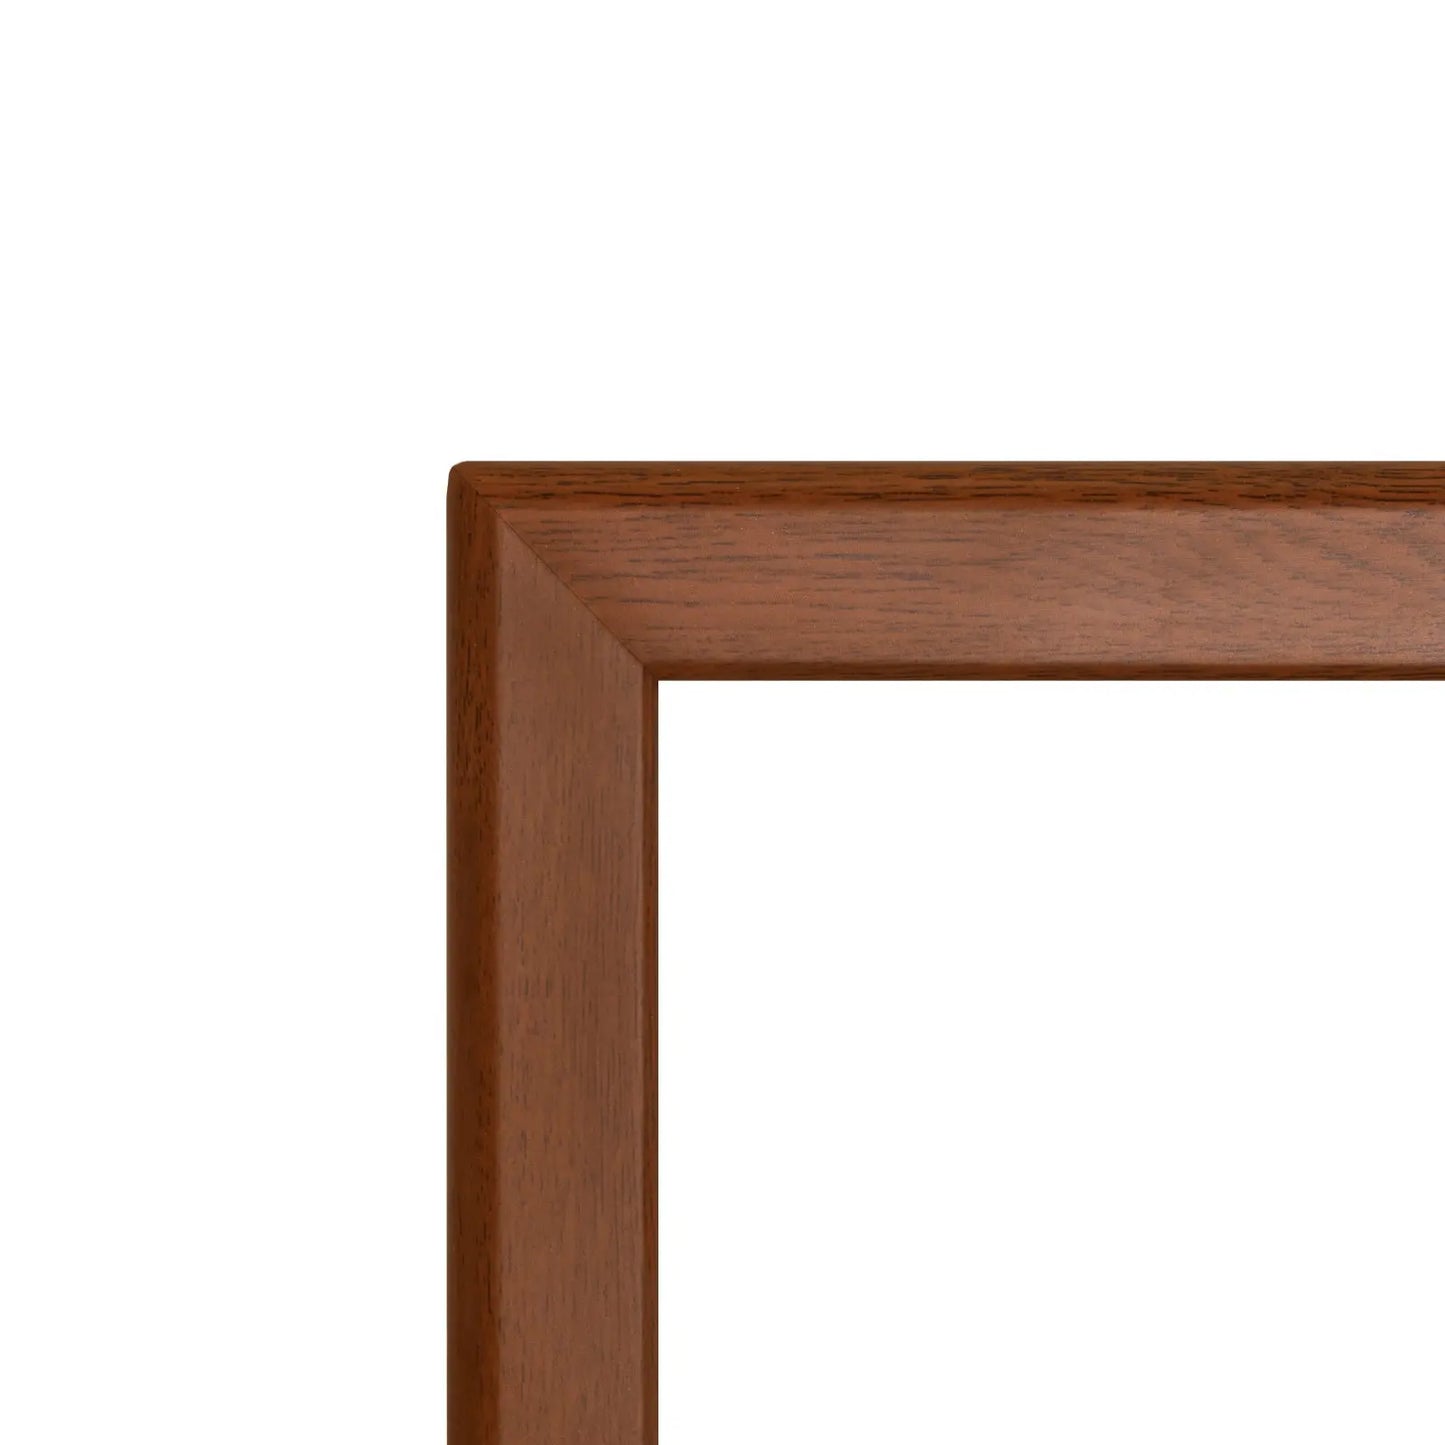 22x28 Dark Wood SnapeZo® Snap Frame - 1.25" Profile - Snap Frames Direct